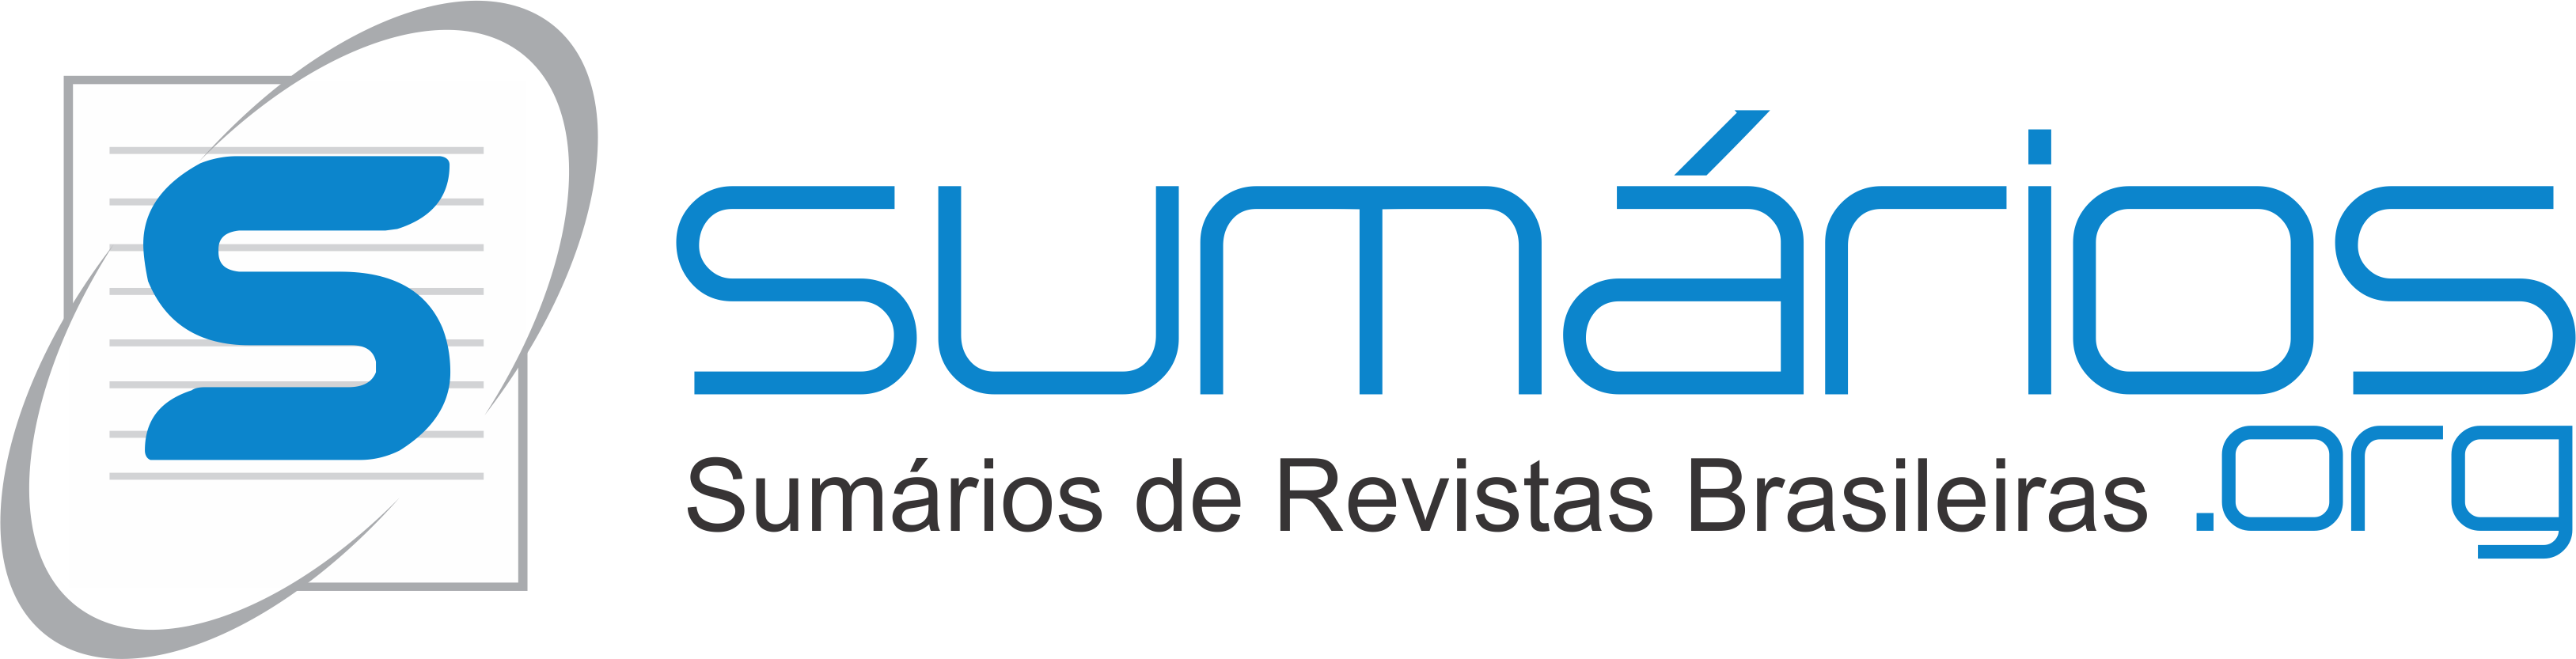 Logo Sumários de Revistas Brasileiras